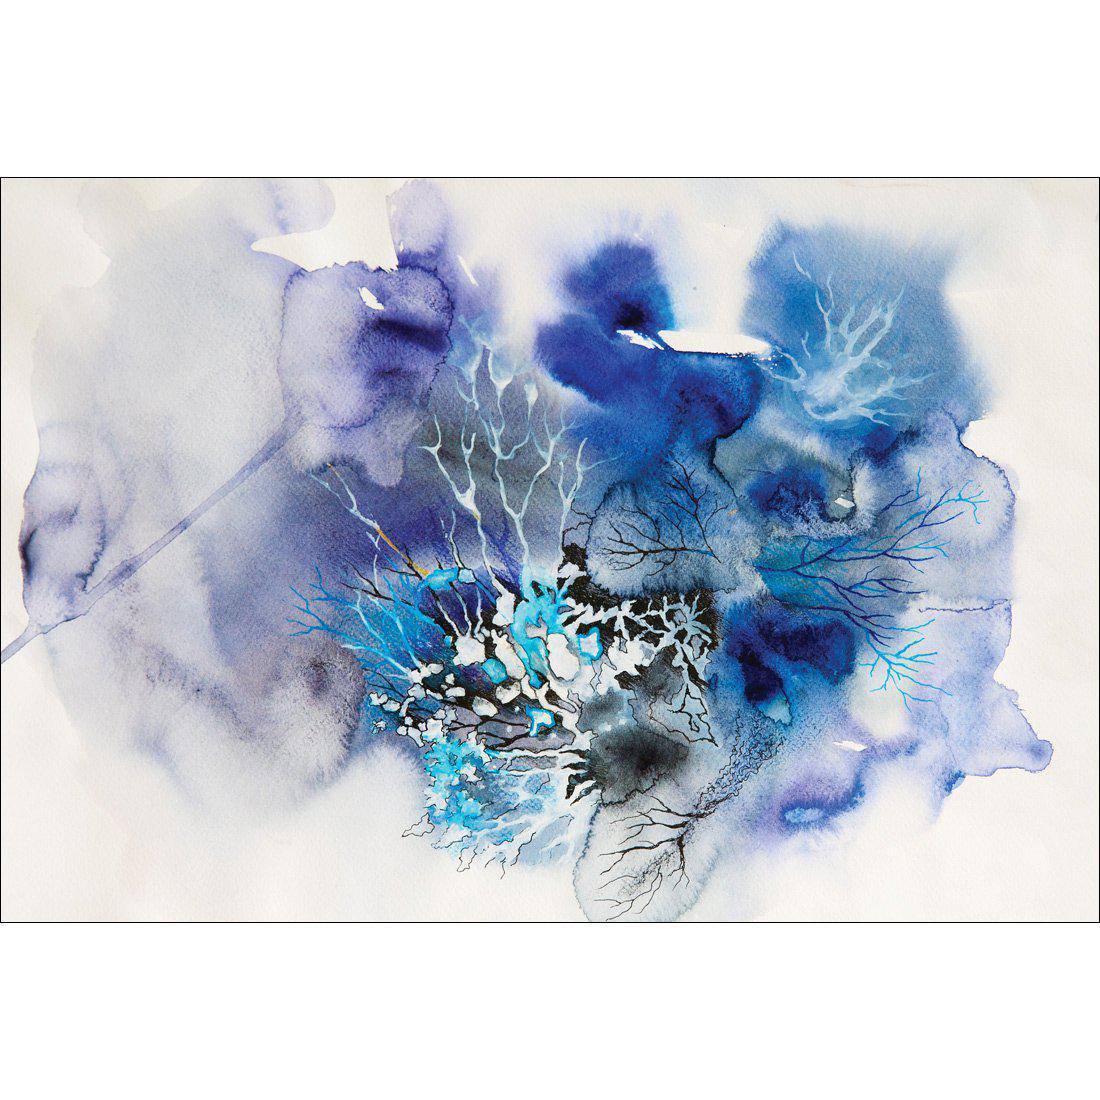 Veins Of Life Blue Canvas Art-Canvas-Wall Art Designs-45x30cm-Canvas - No Frame-Wall Art Designs